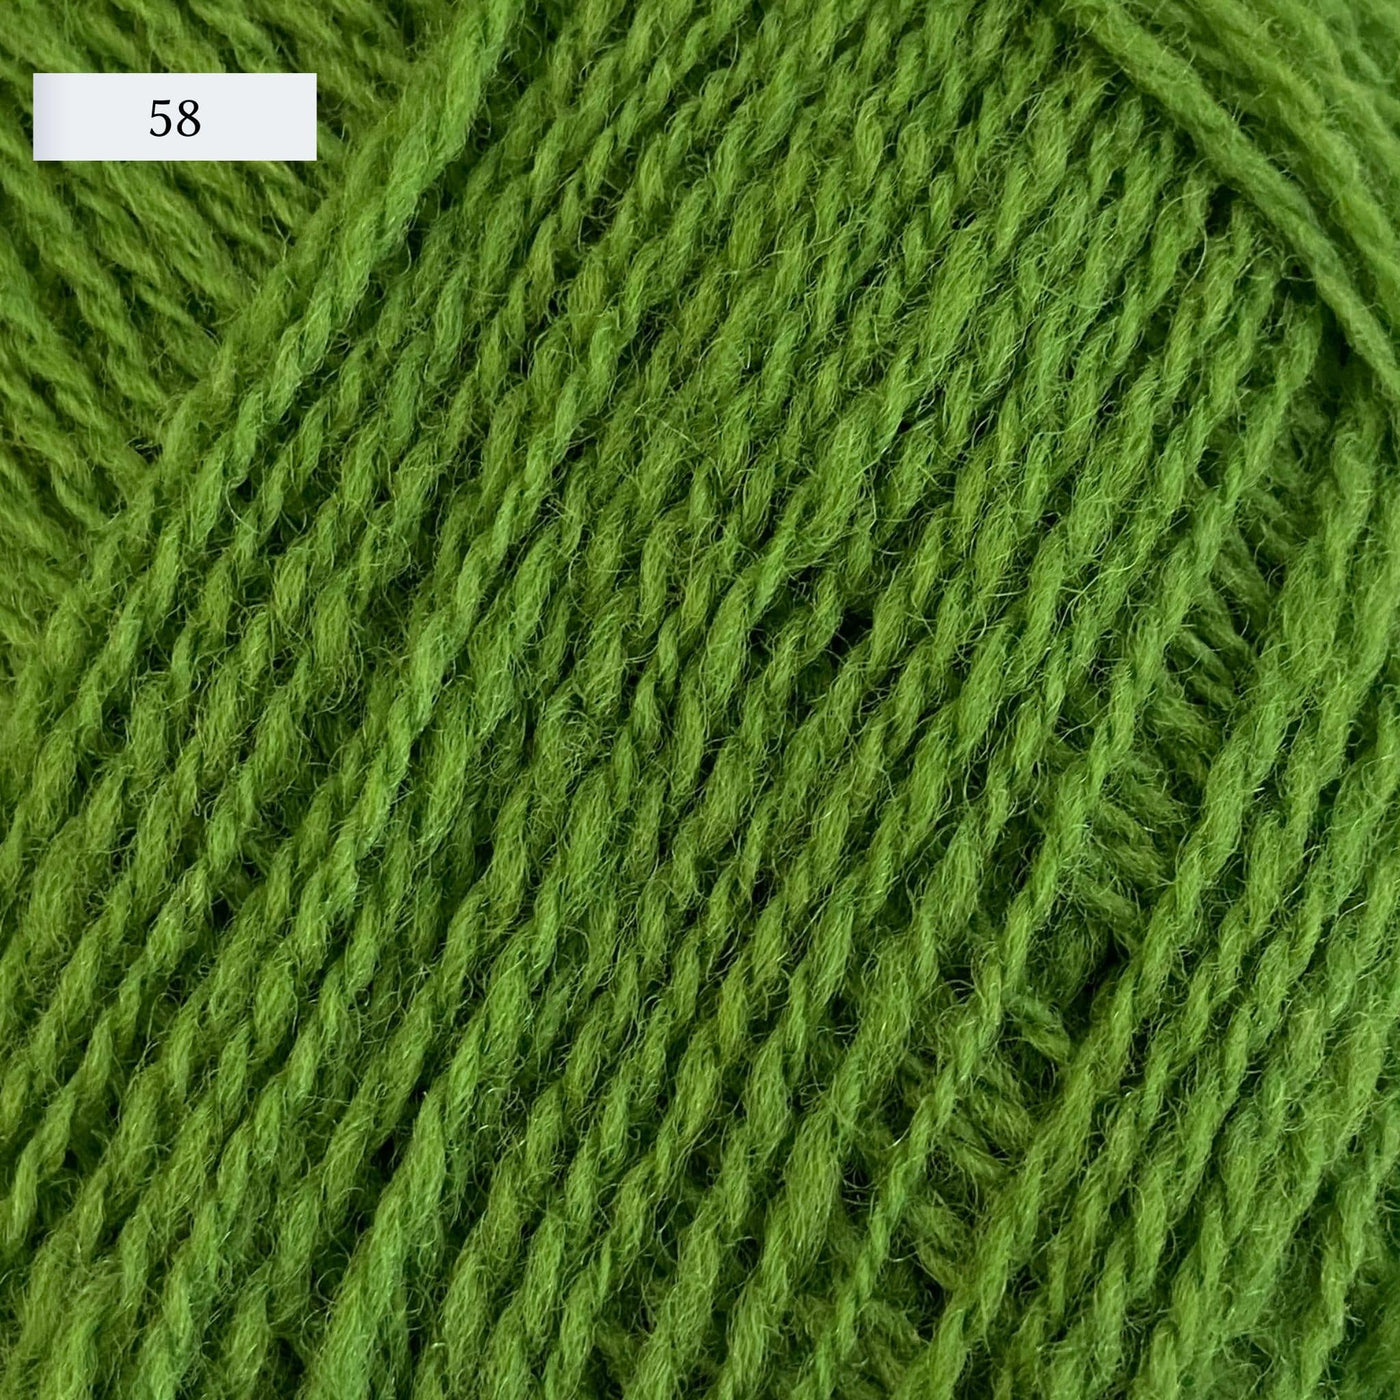 Rauma Lamullgarn, a fingering weight yarn, in color 58, a bright grass green